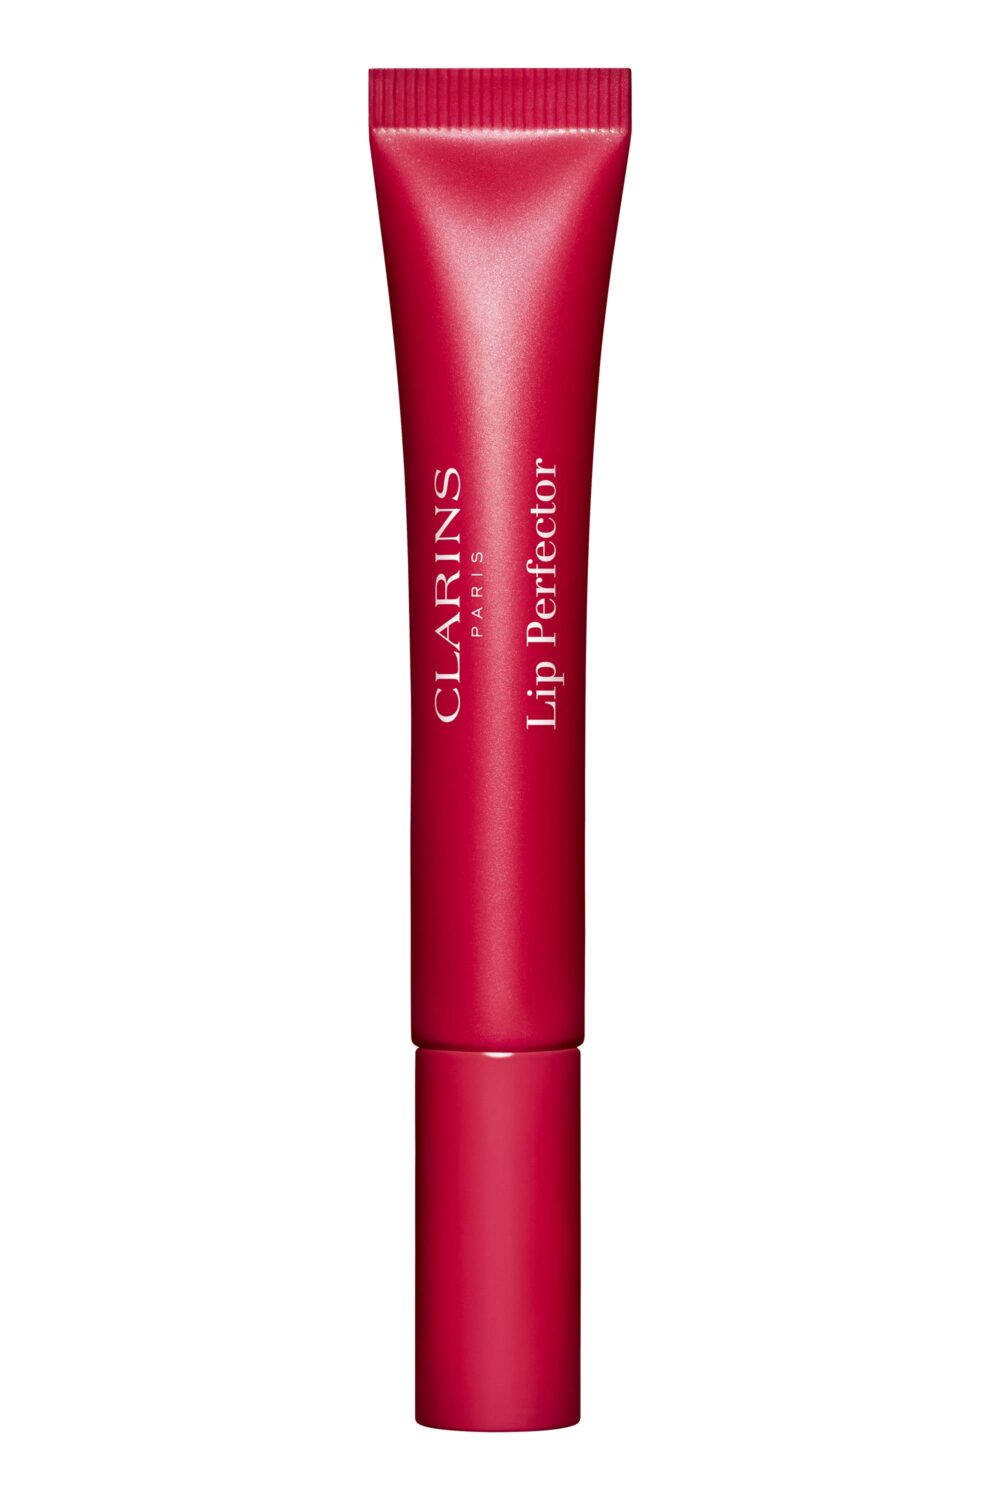 Clarins - Embellisseur lèvres et joues Glow Gloss 24 Fuschia Glow